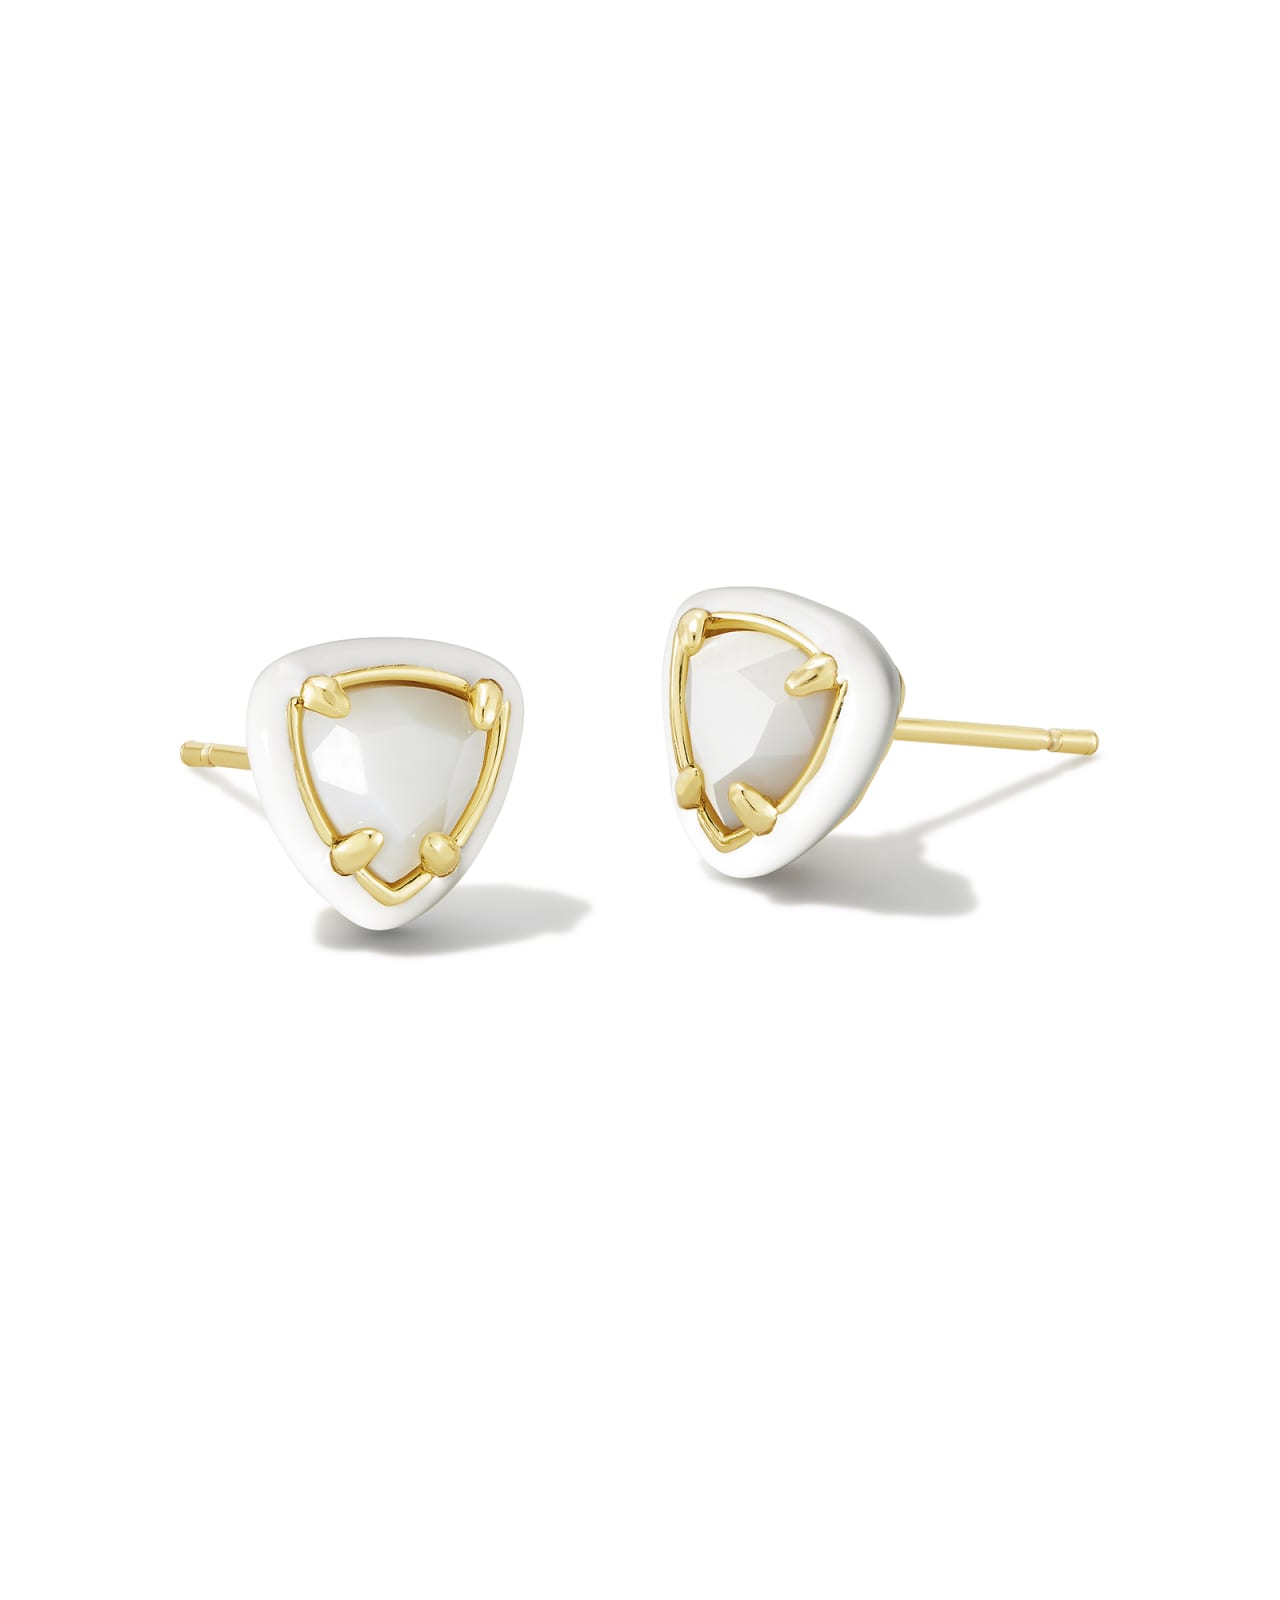 Arden Gold Enamel Framed Stud Earrings in White Mother-of-Pearl image number 0